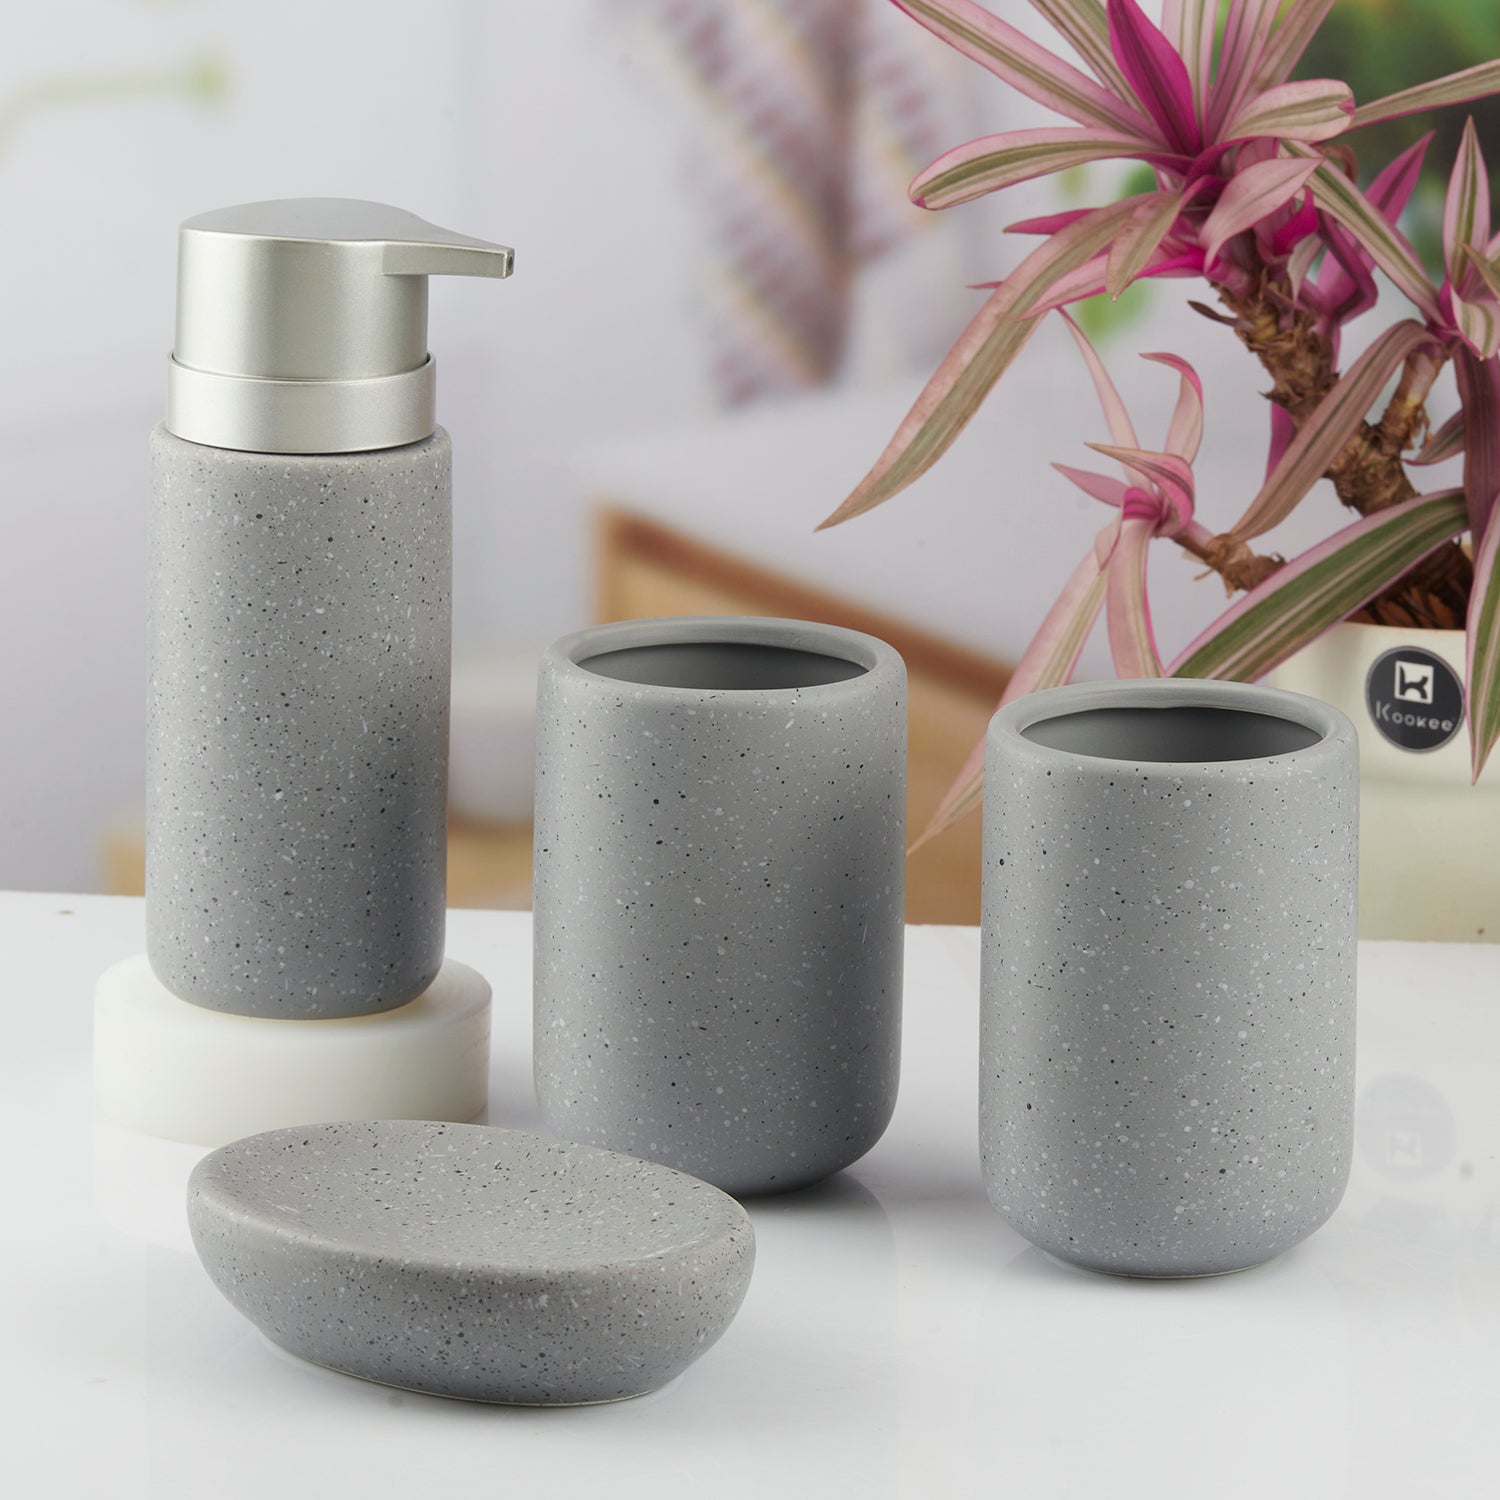 Ceramic Bathroom Accessories Set of 4 Bath Set with Soap Dispenser (10092)